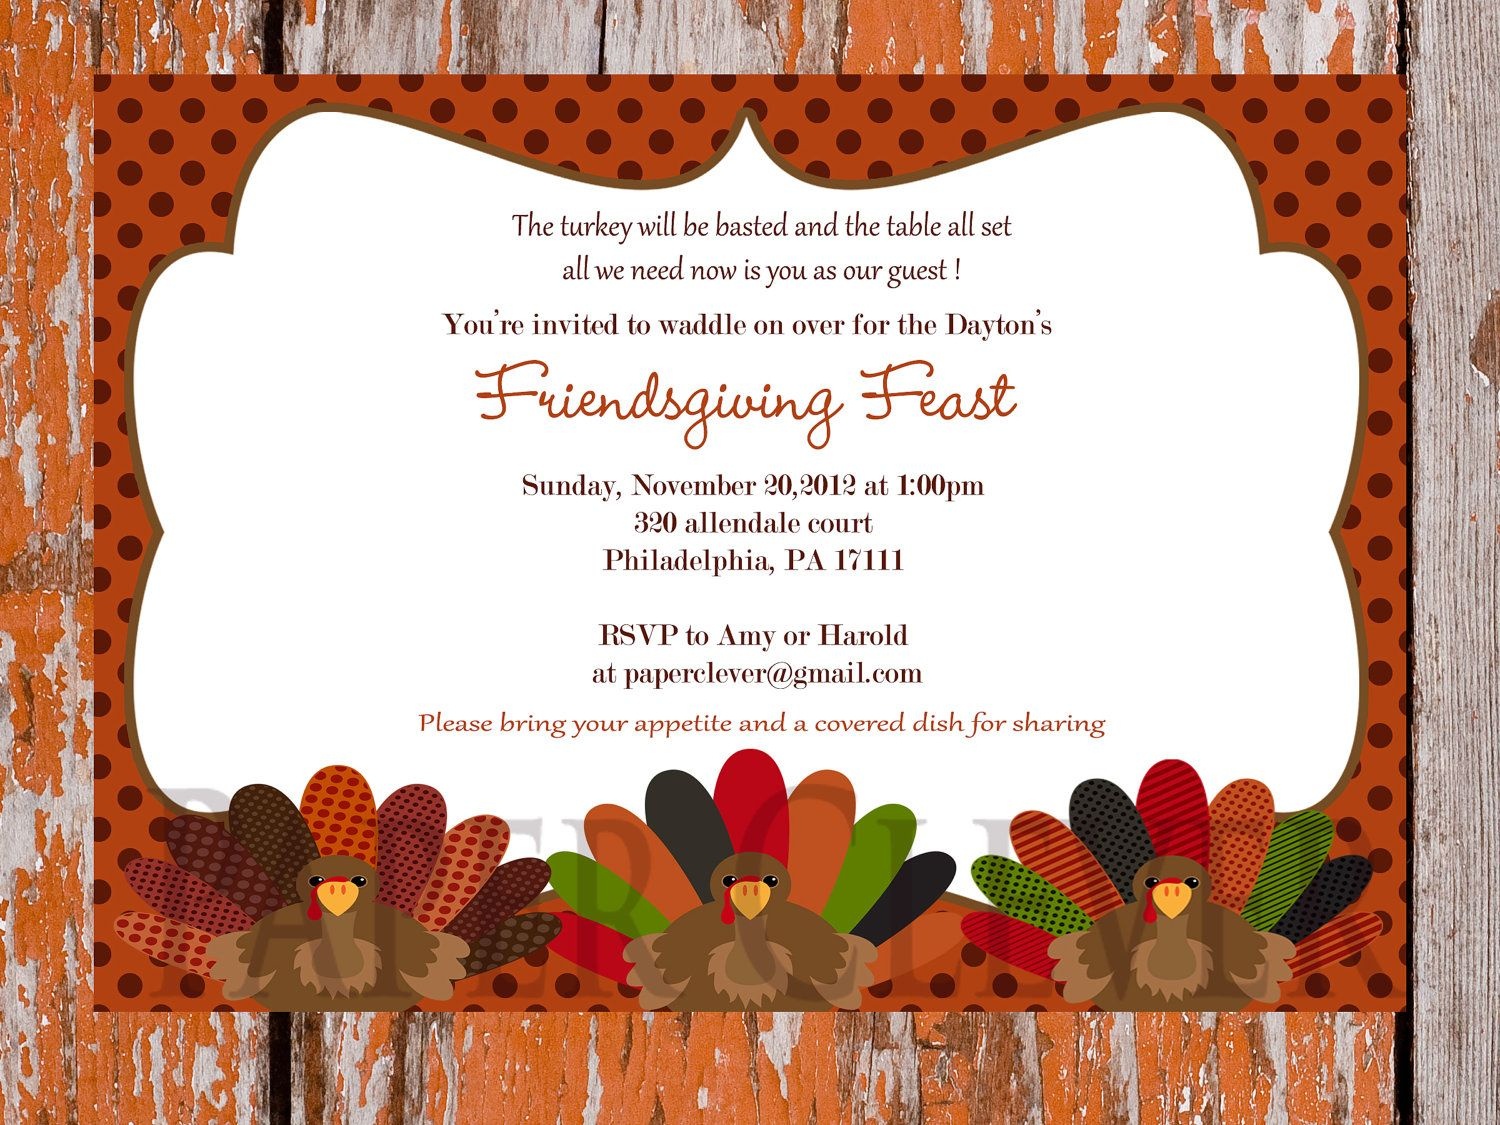 Thanksgiving Invitation Free Template